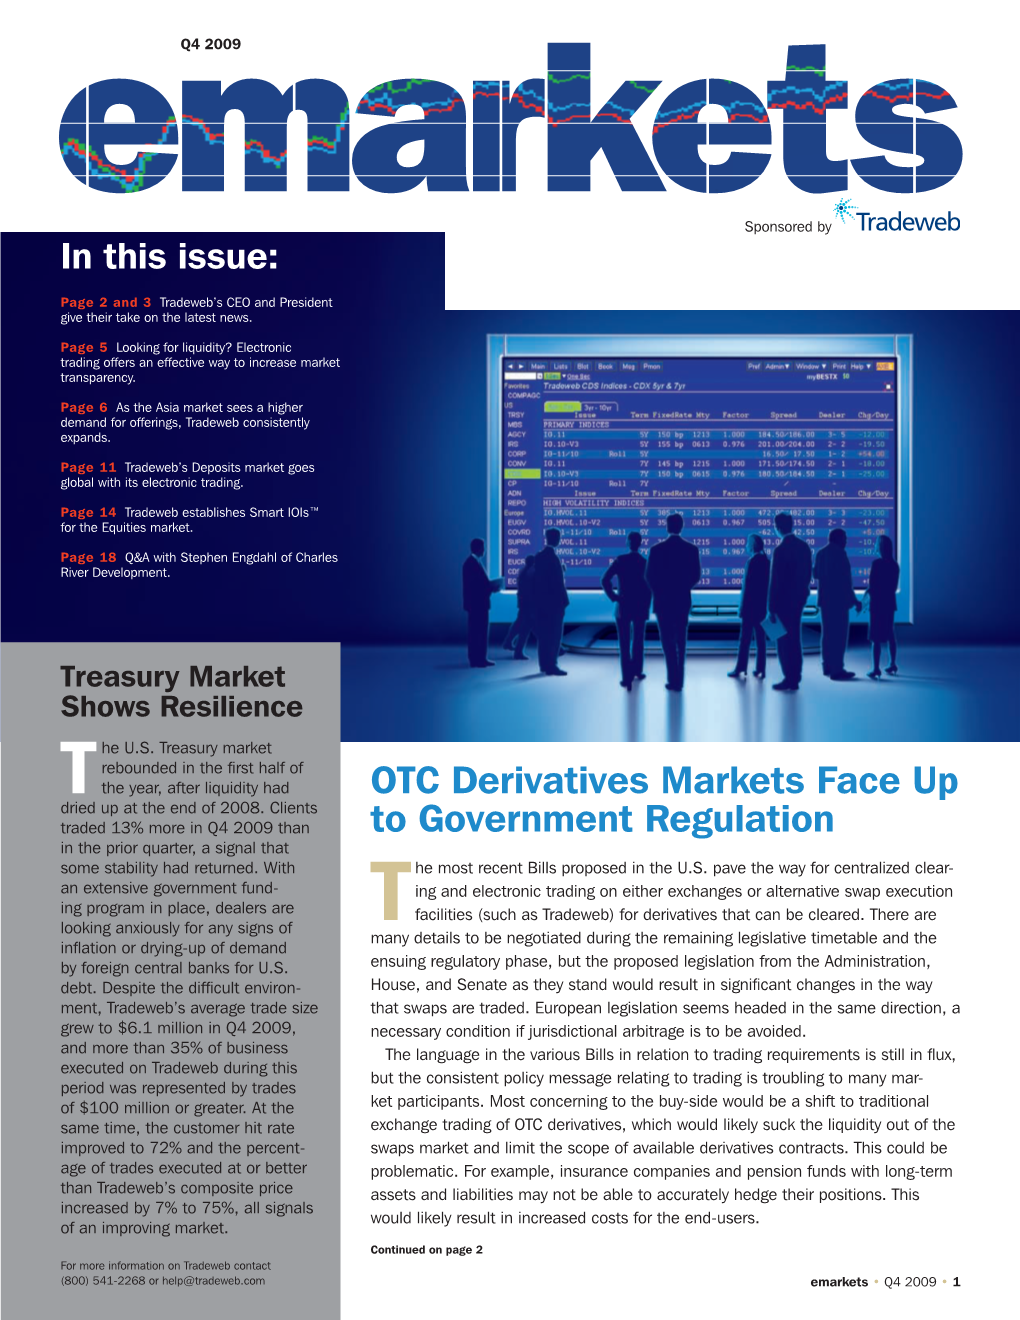 OTC Derivatives Markets Face up to Government Regulation